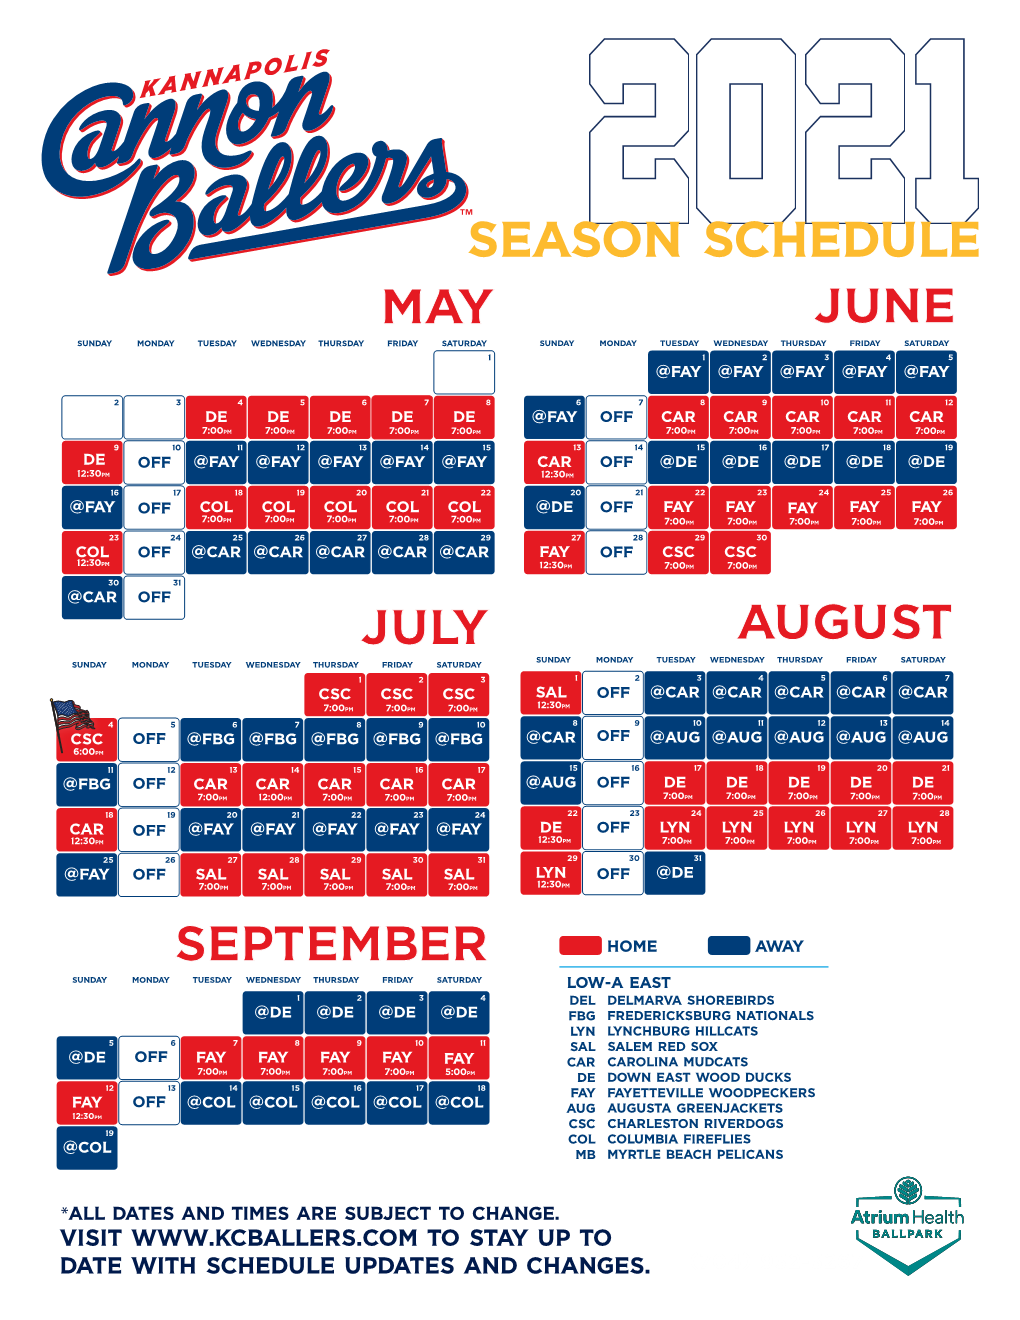 Season Schedule